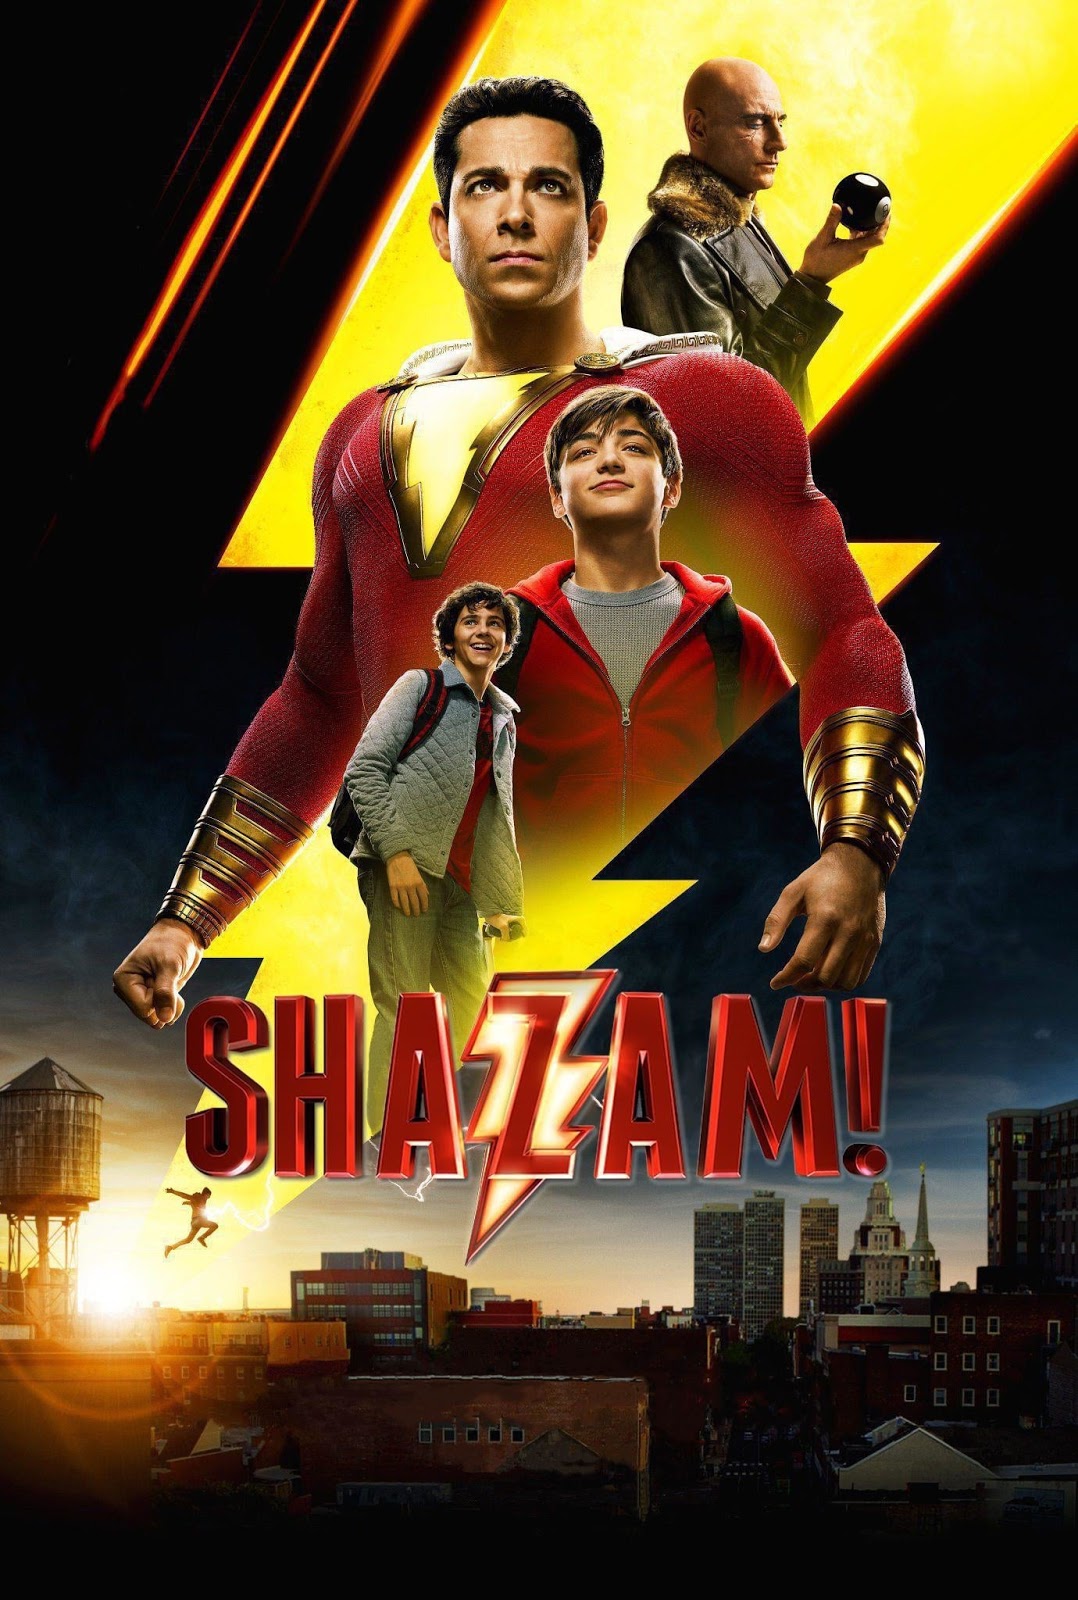 Shazam movie torrent pirate bay